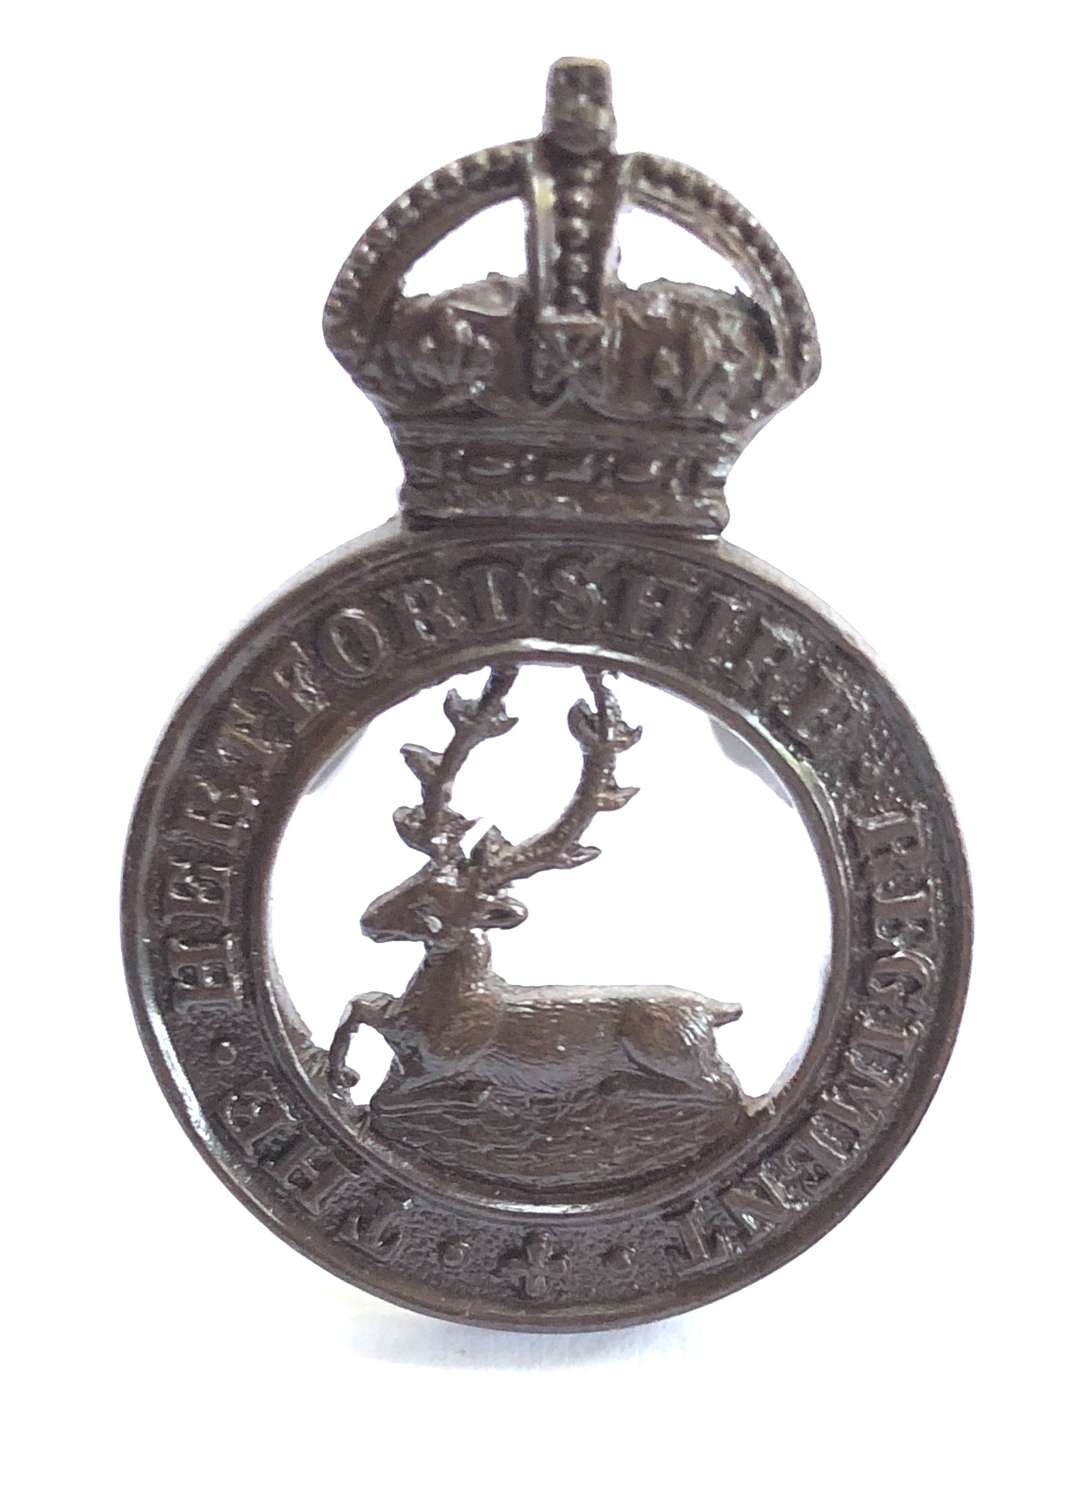 The Hertfordshire Regiment OSD cap badge by JR Gaunt, London